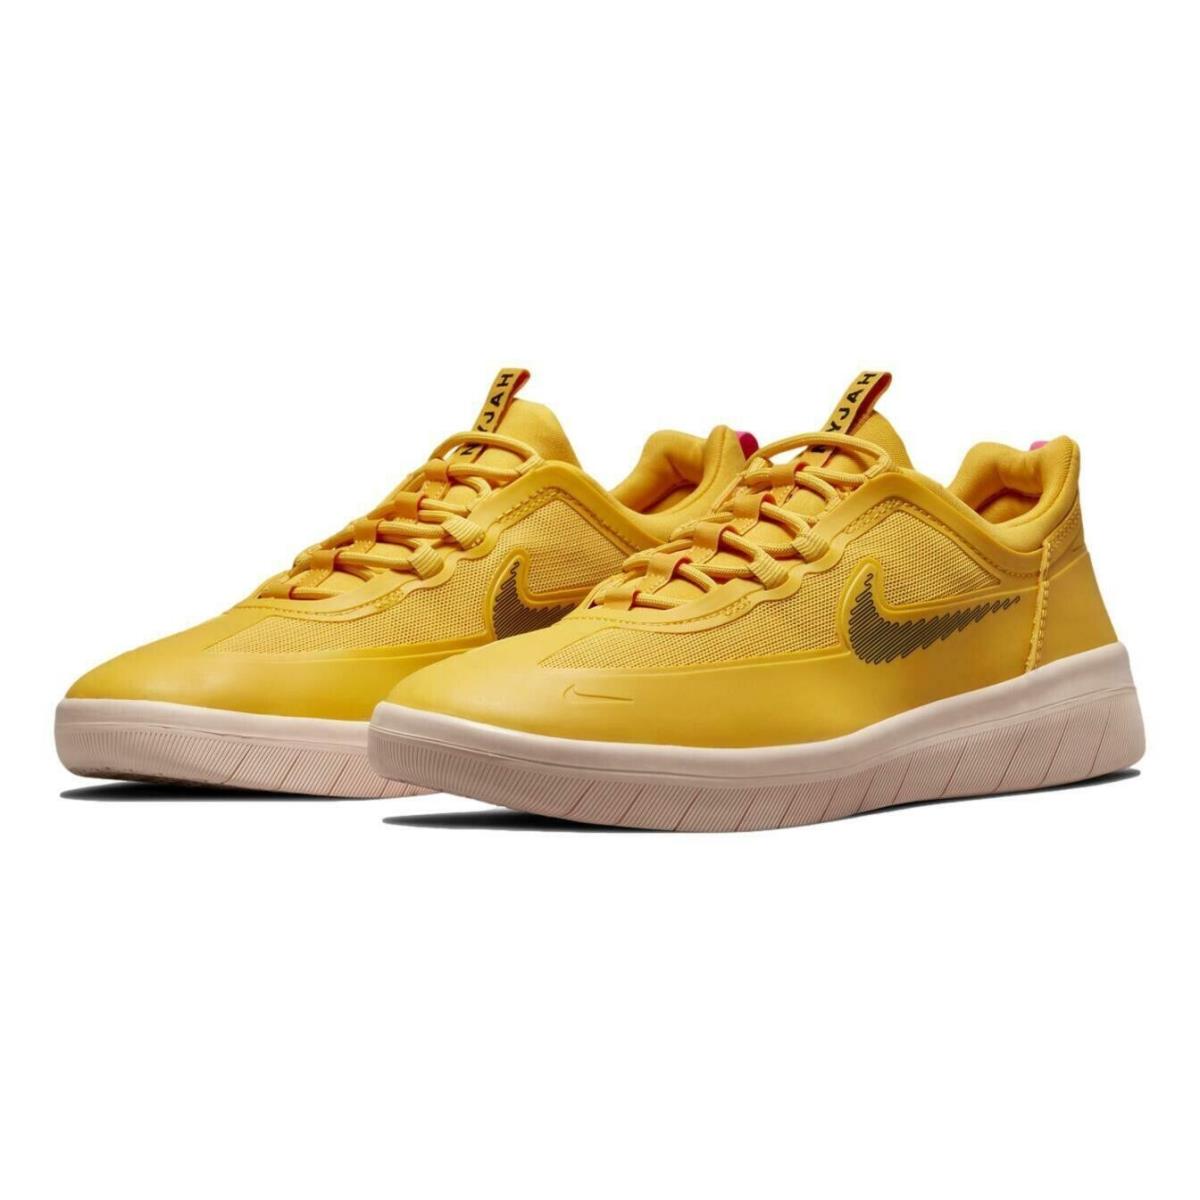 Nike SB Nyjah Free 2 Mens Size 8.5 Sneaker Shoes CU9220 700 Pollen Yellow